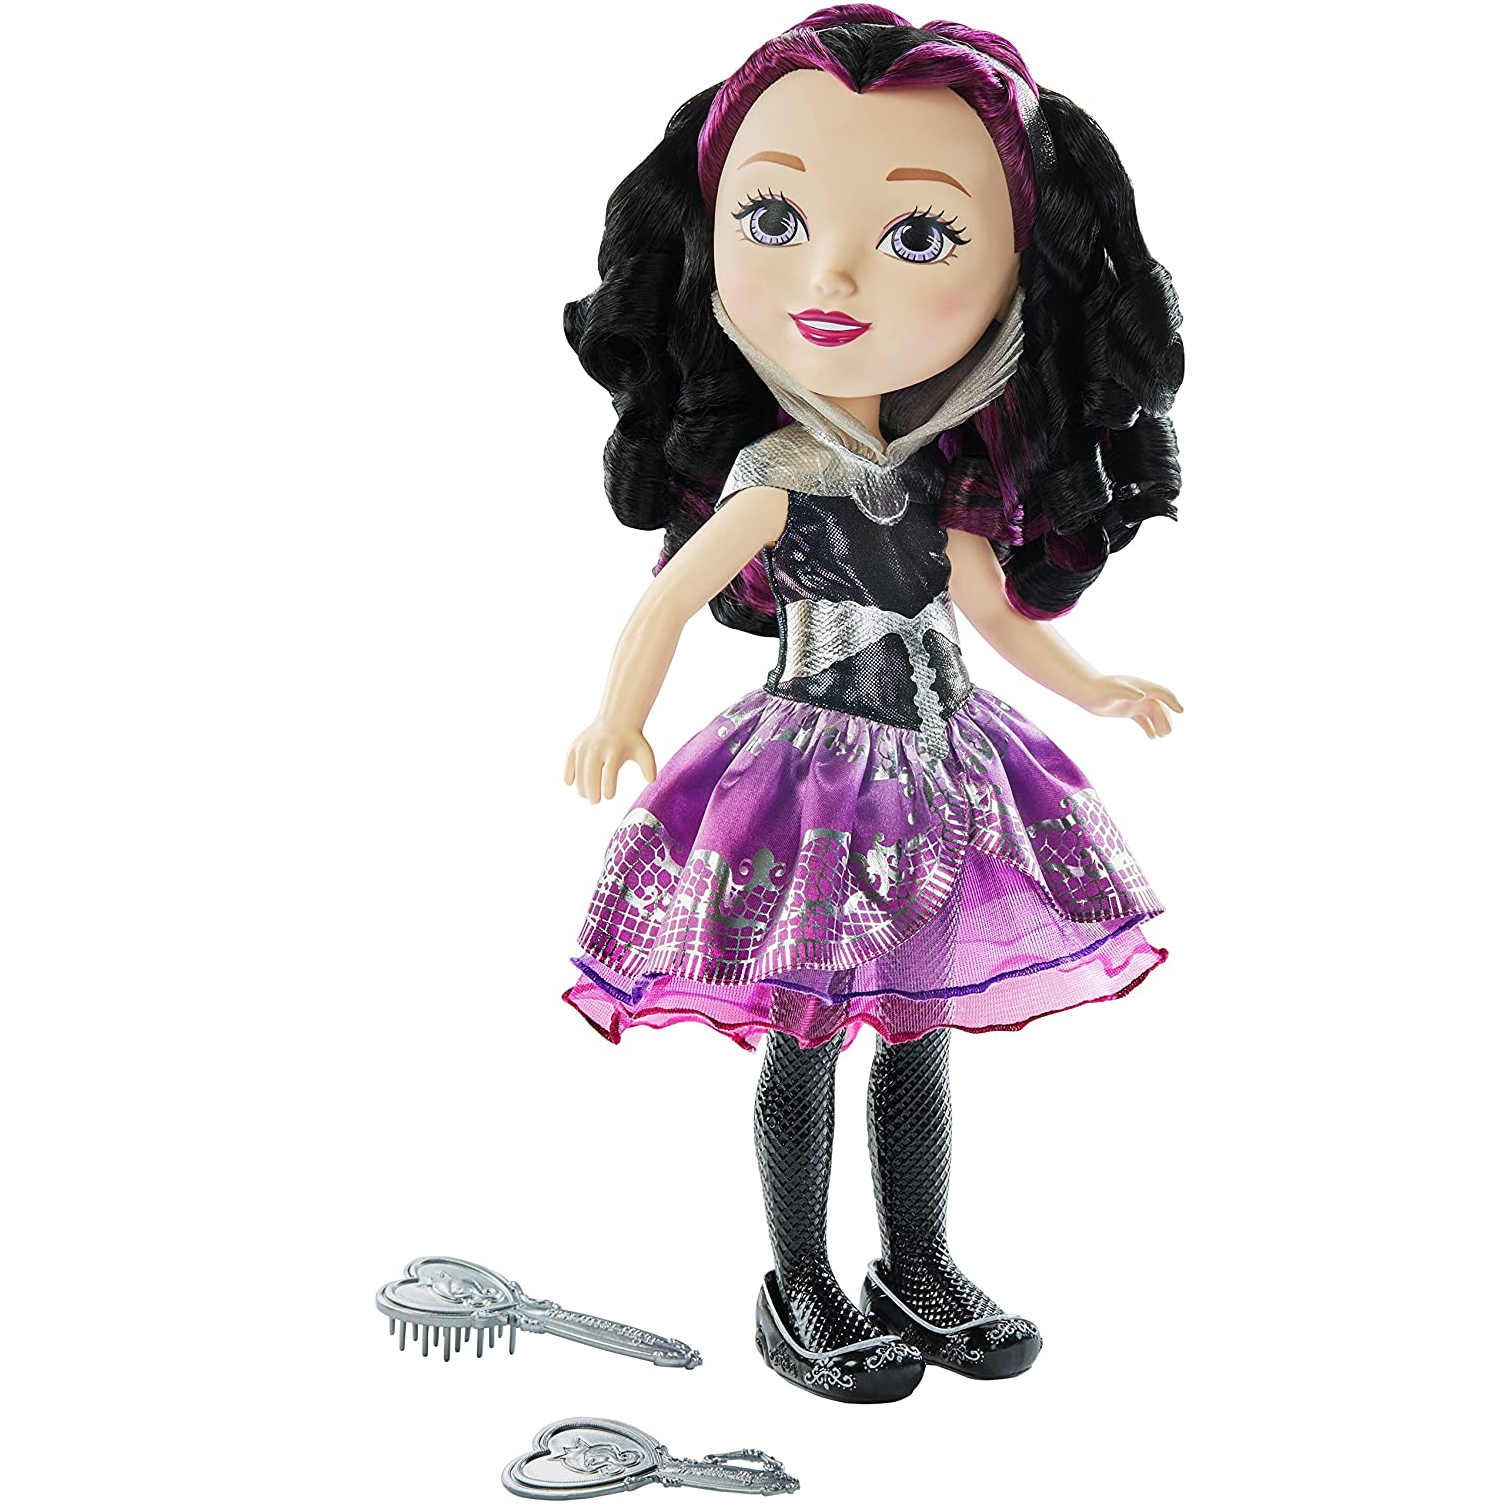 Mattel 2018 Raven Queen Ever After High First Wave Articulated Doll BBD42